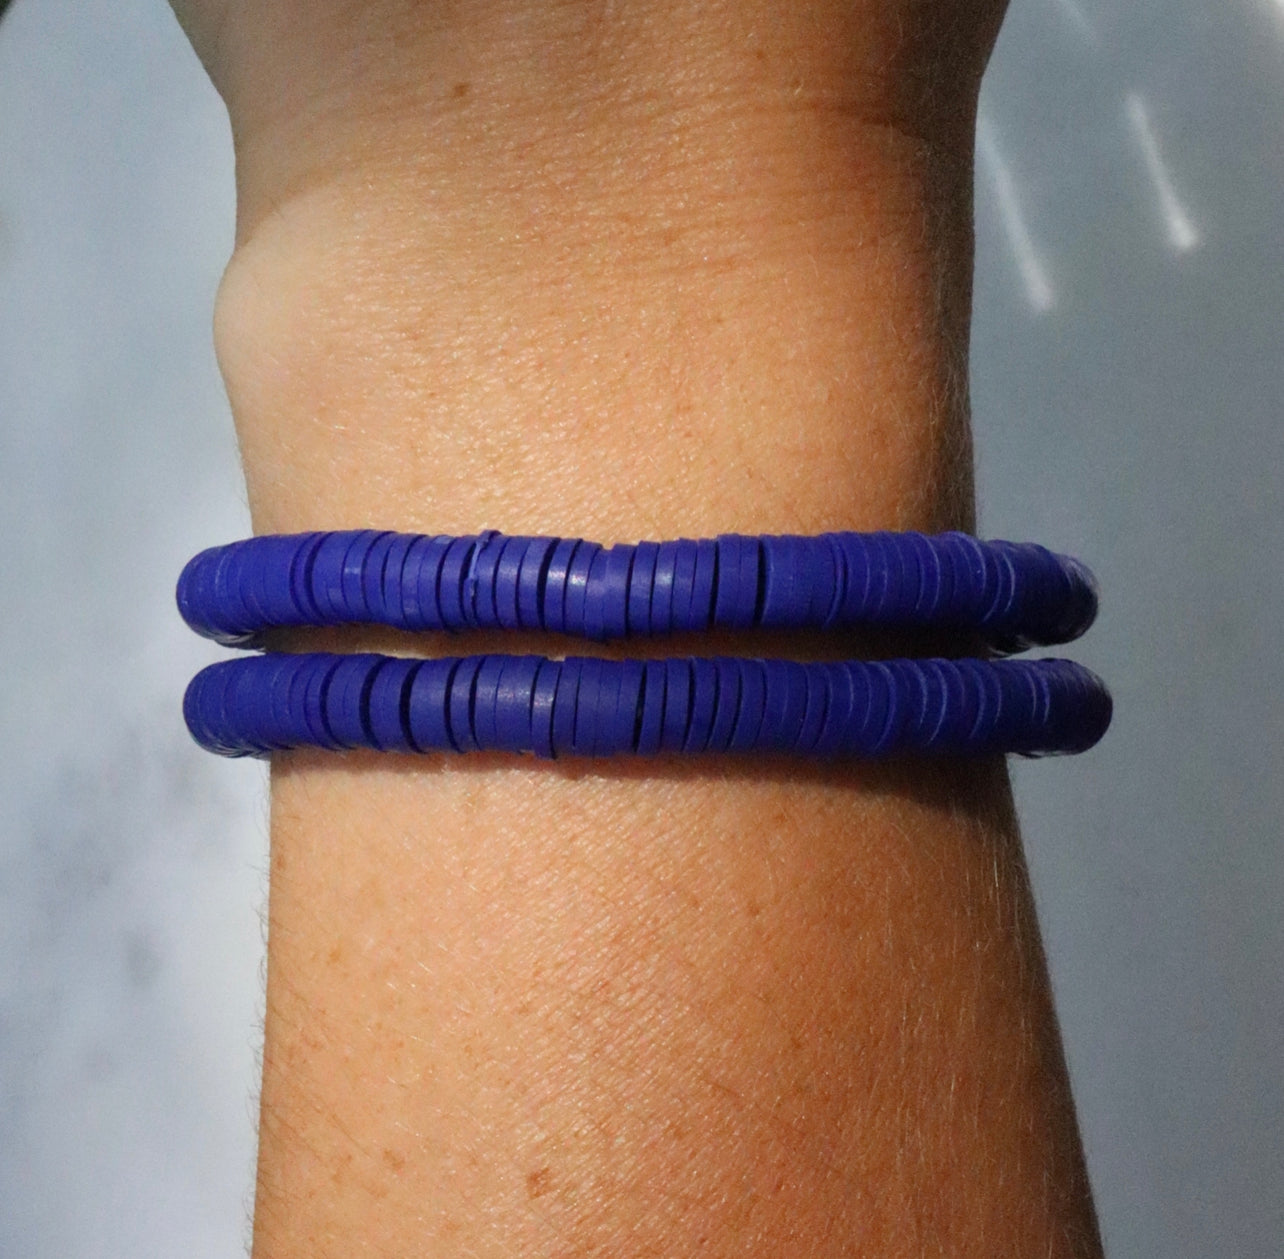 Navy Blue Clay Bracelet